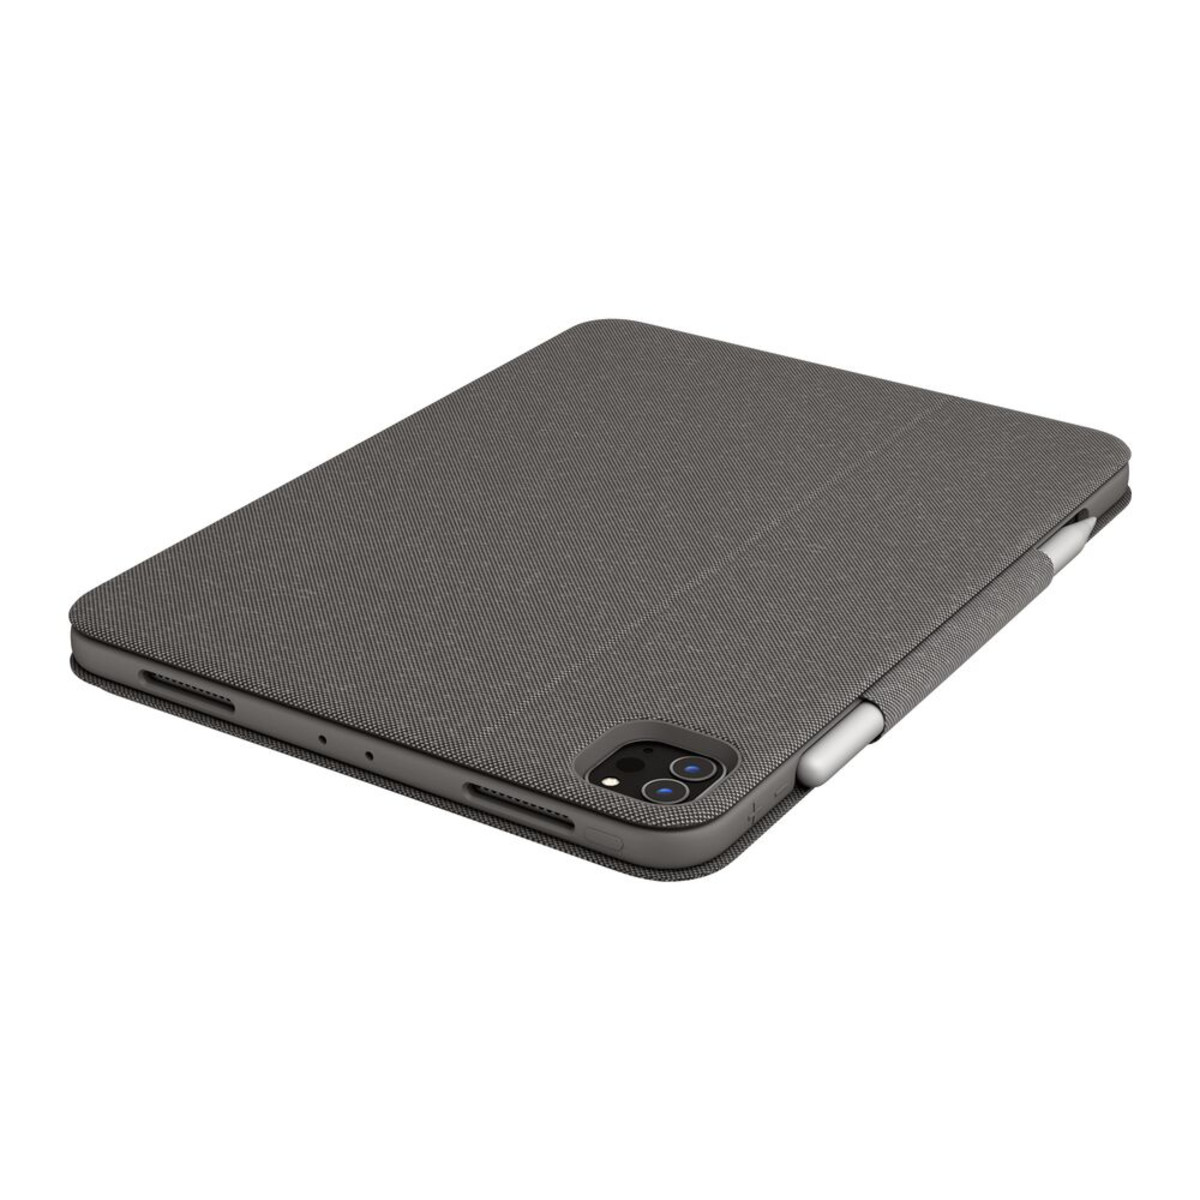 Folio Touch - Grey - UK - INTNL